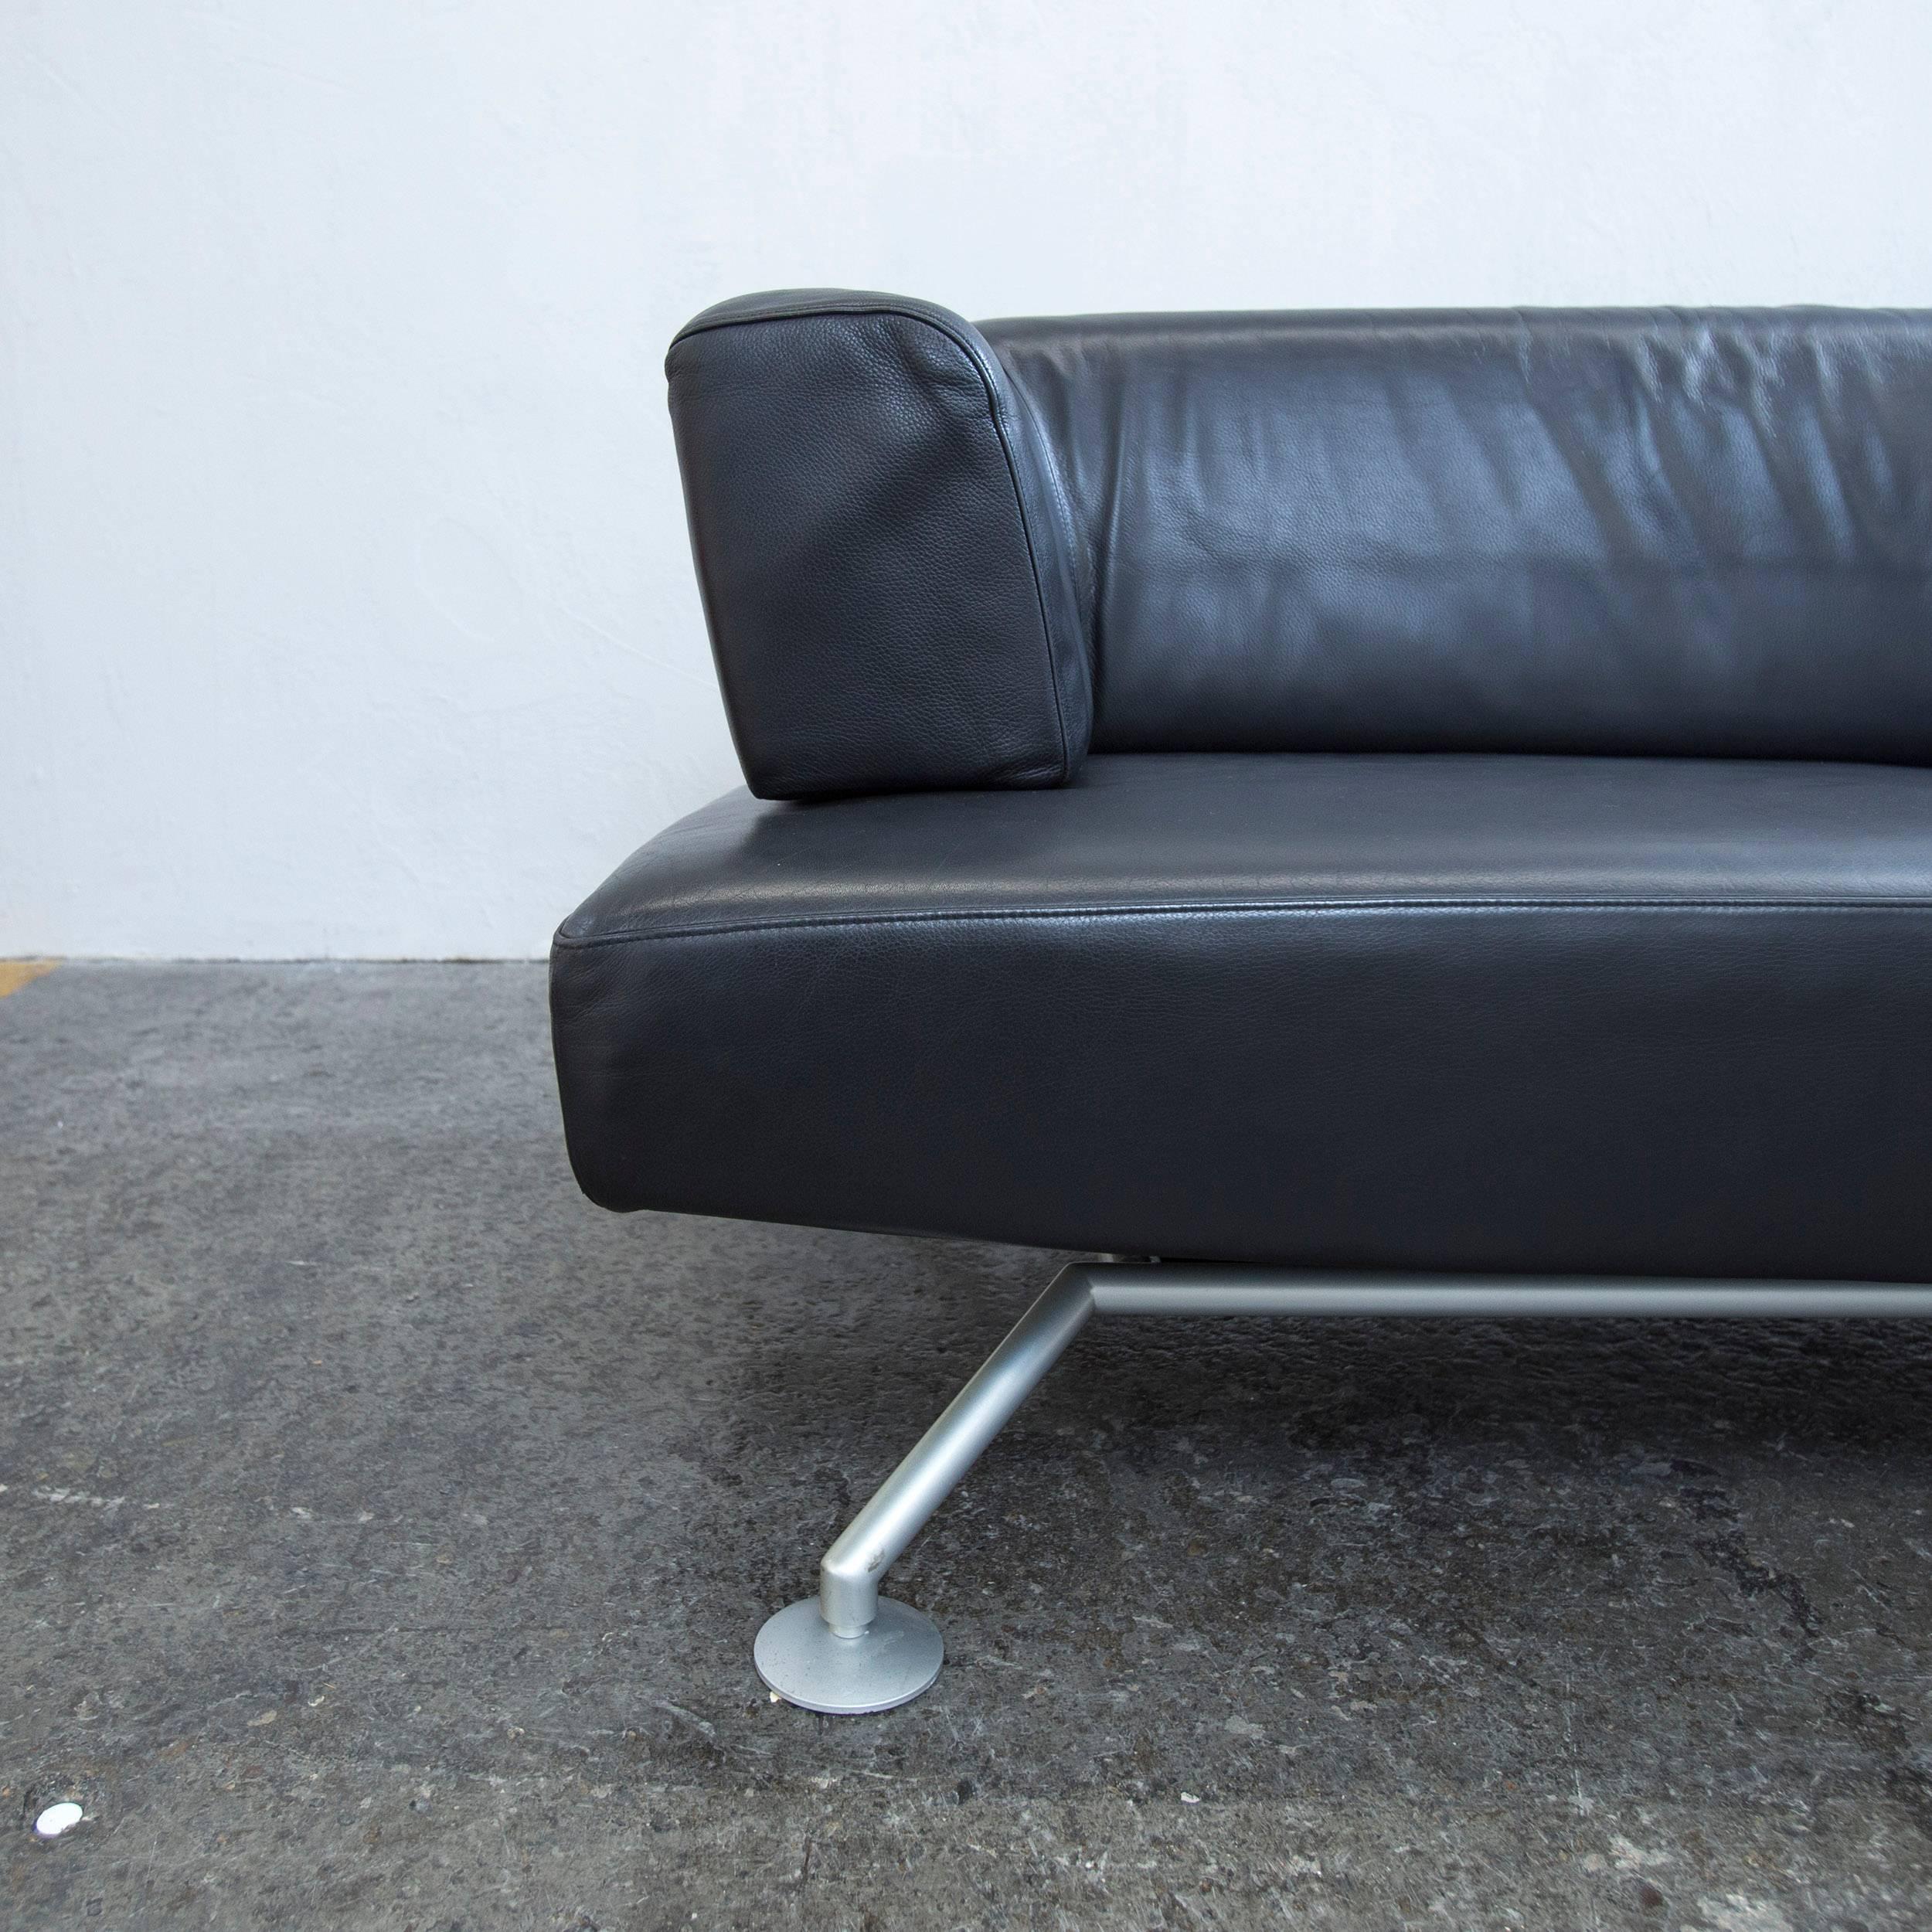 Black colored original COR Circum designer leather sofa in a minimalistic and modern design, made for pure comfort and flexibility.